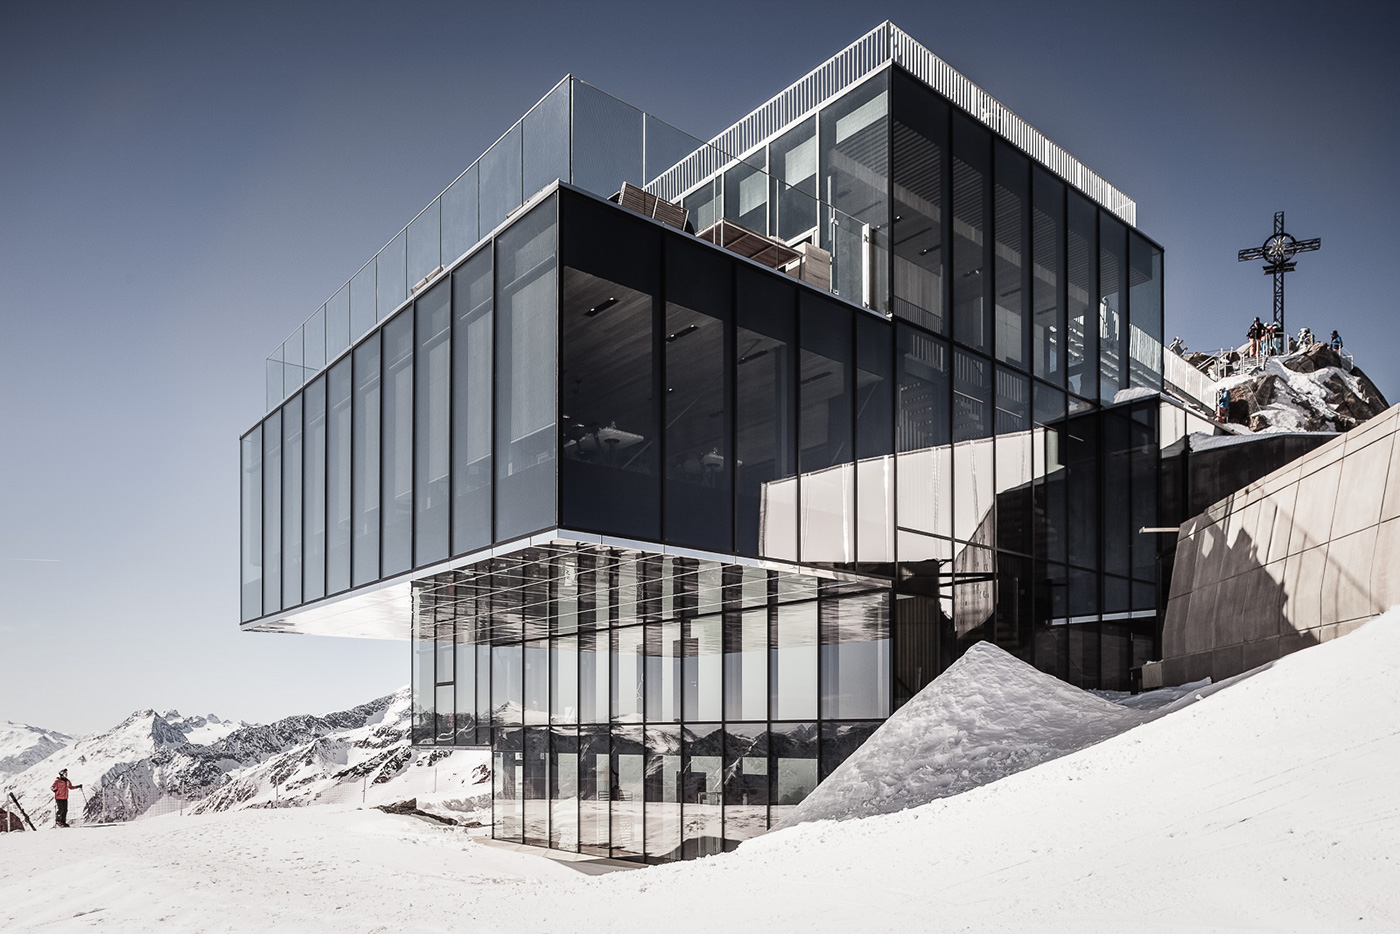 ice-q architecture Photography  building restaurant austria sceenic Landscape mountains snow